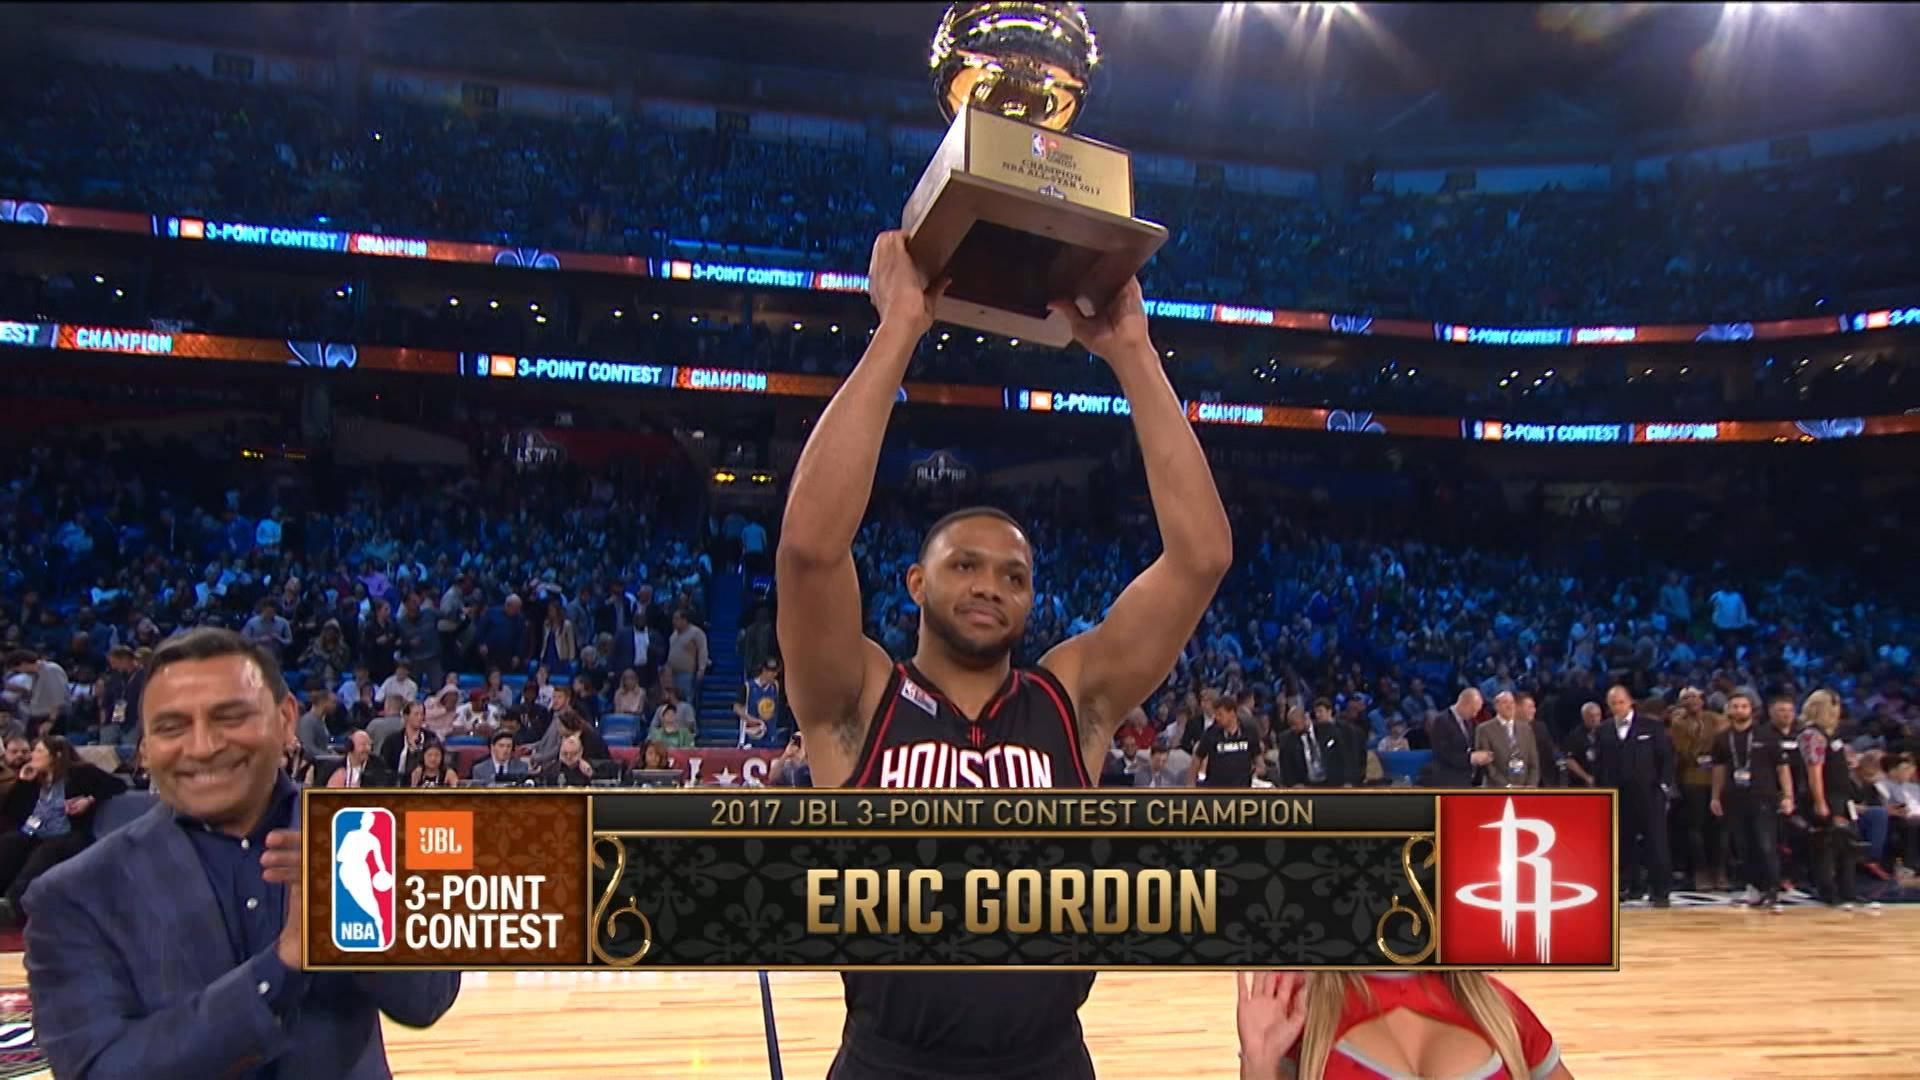 Eric Gordon - The 3-point Contest Champion Background